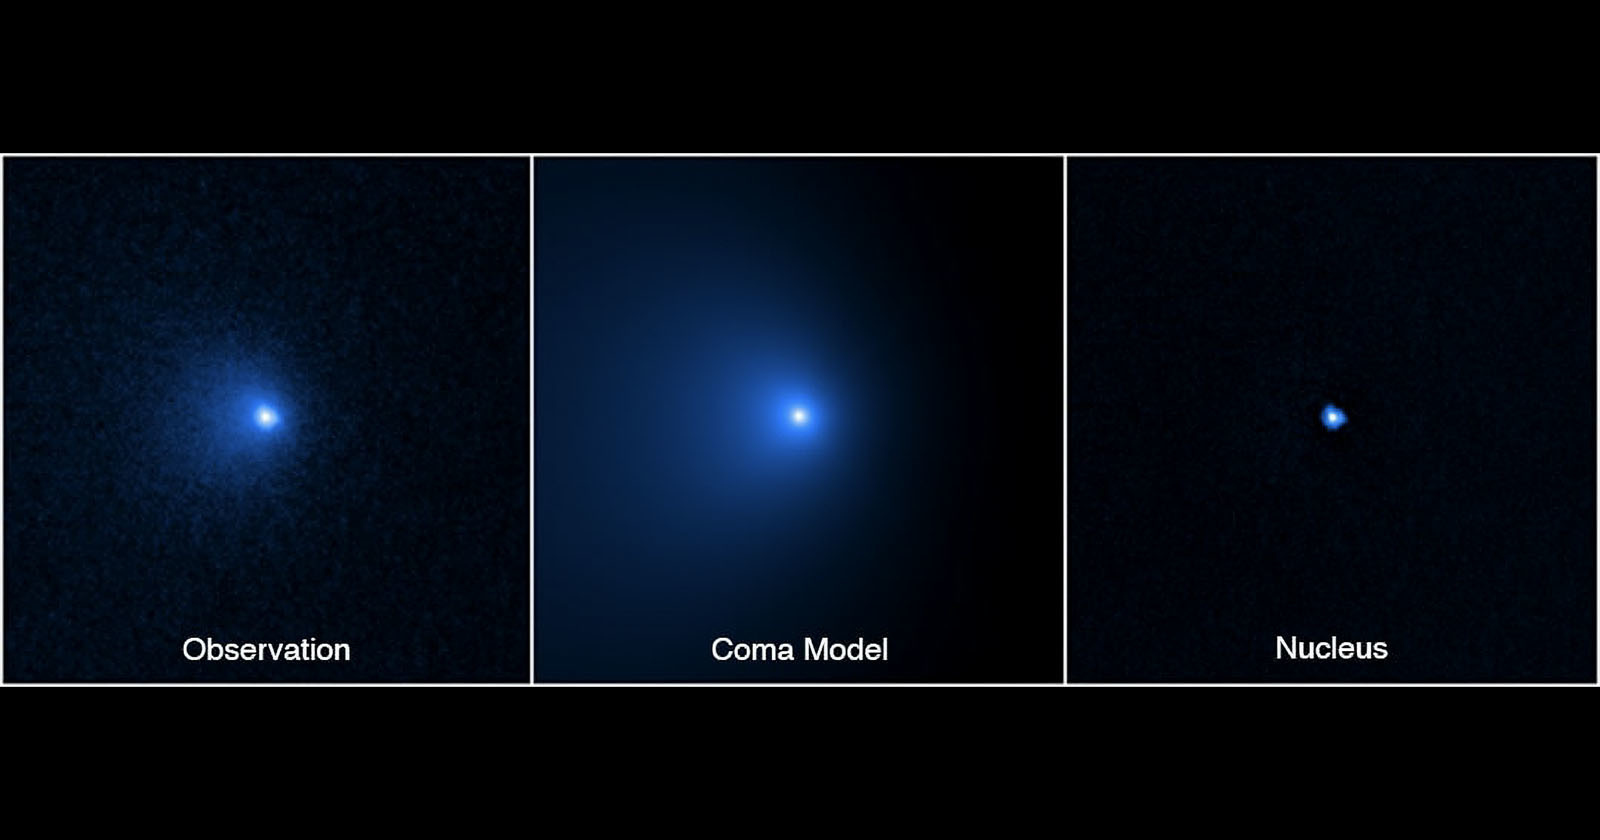 Comet C/2014 UN271 (Bernardinelli-Bernstein)